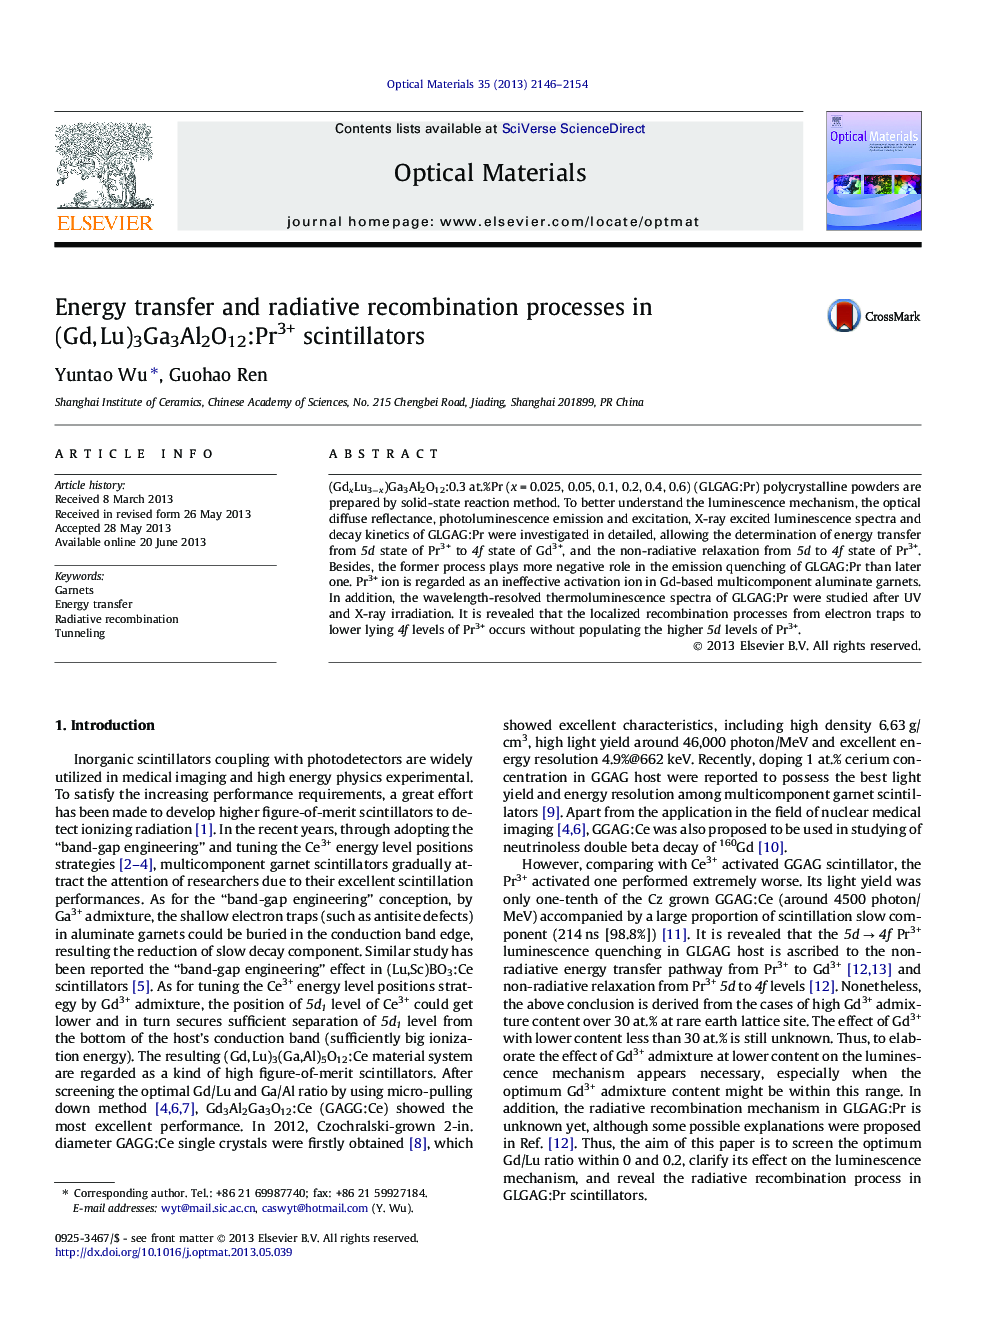 Energy transfer and radiative recombination processes in (Gd, Lu)3Ga3Al2O12:Pr3+ scintillators